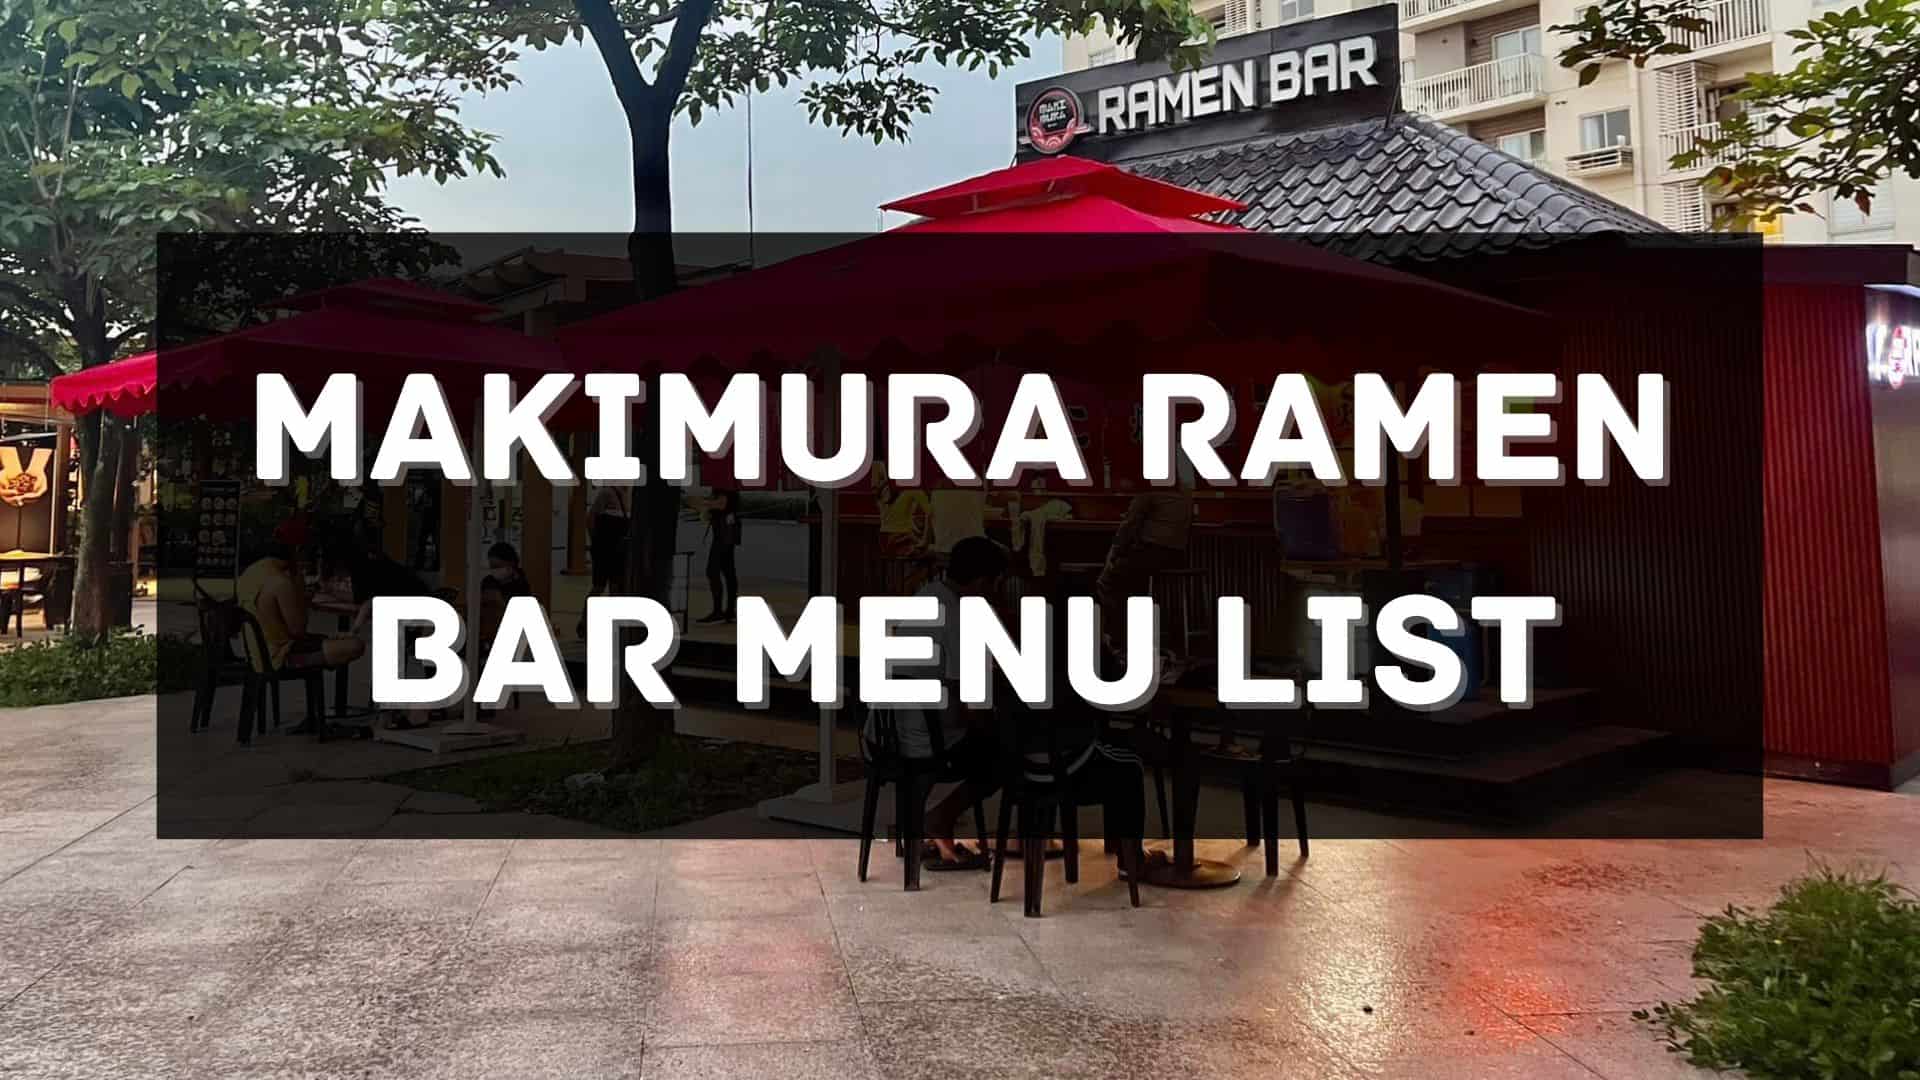 makimura ramen bar menu prices philippines